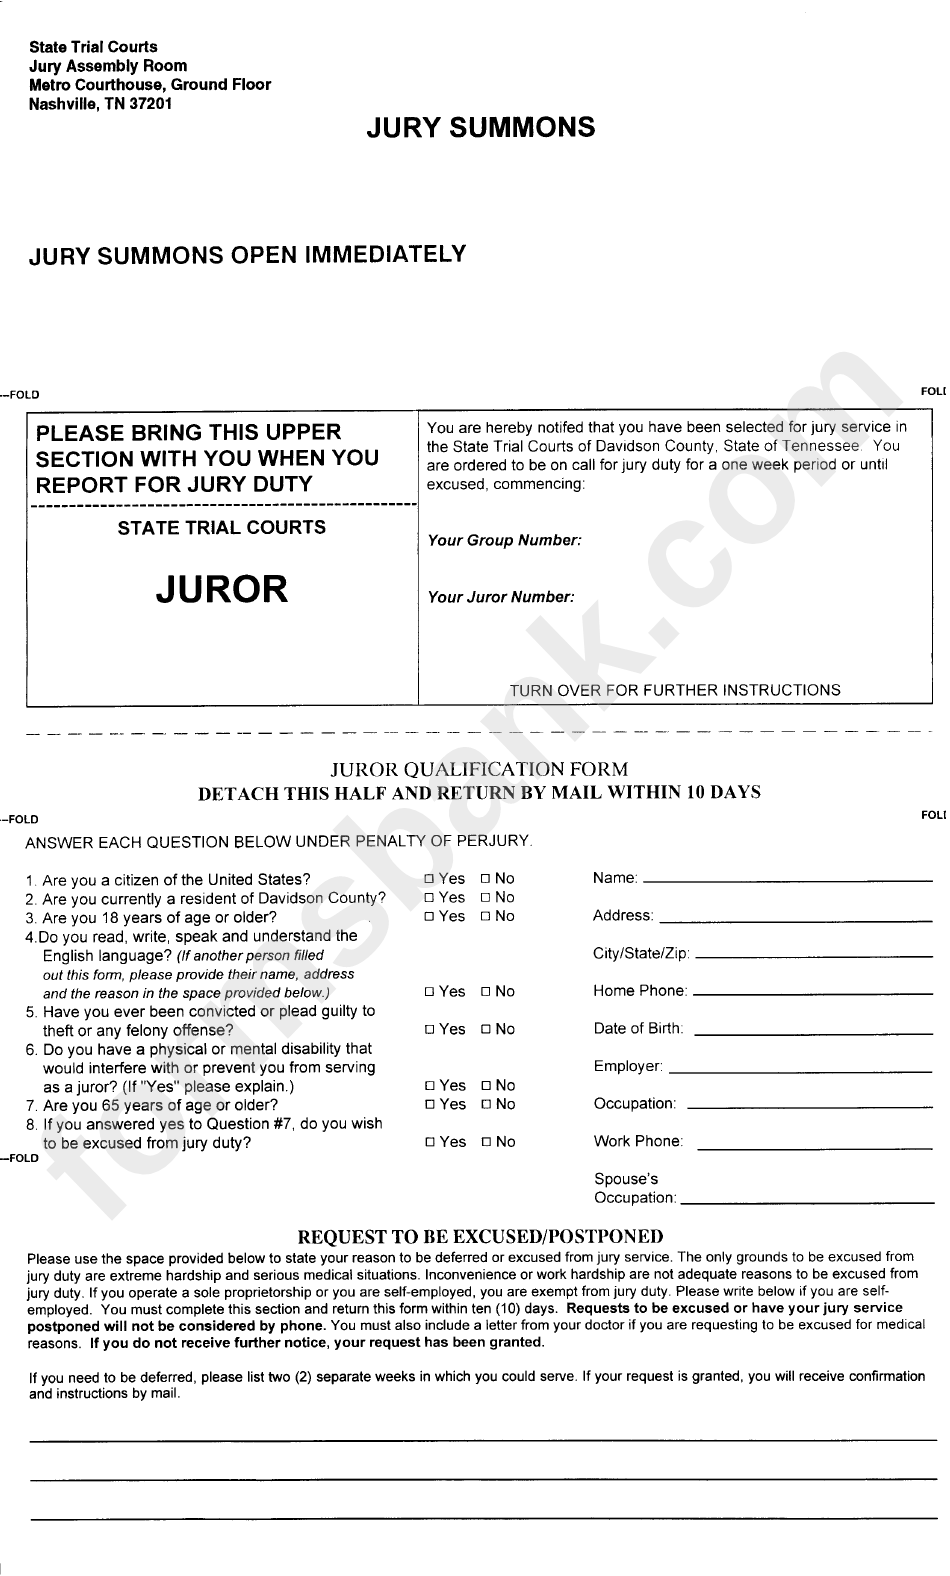 Juror Qualification Form Jury Summons printable pdf download